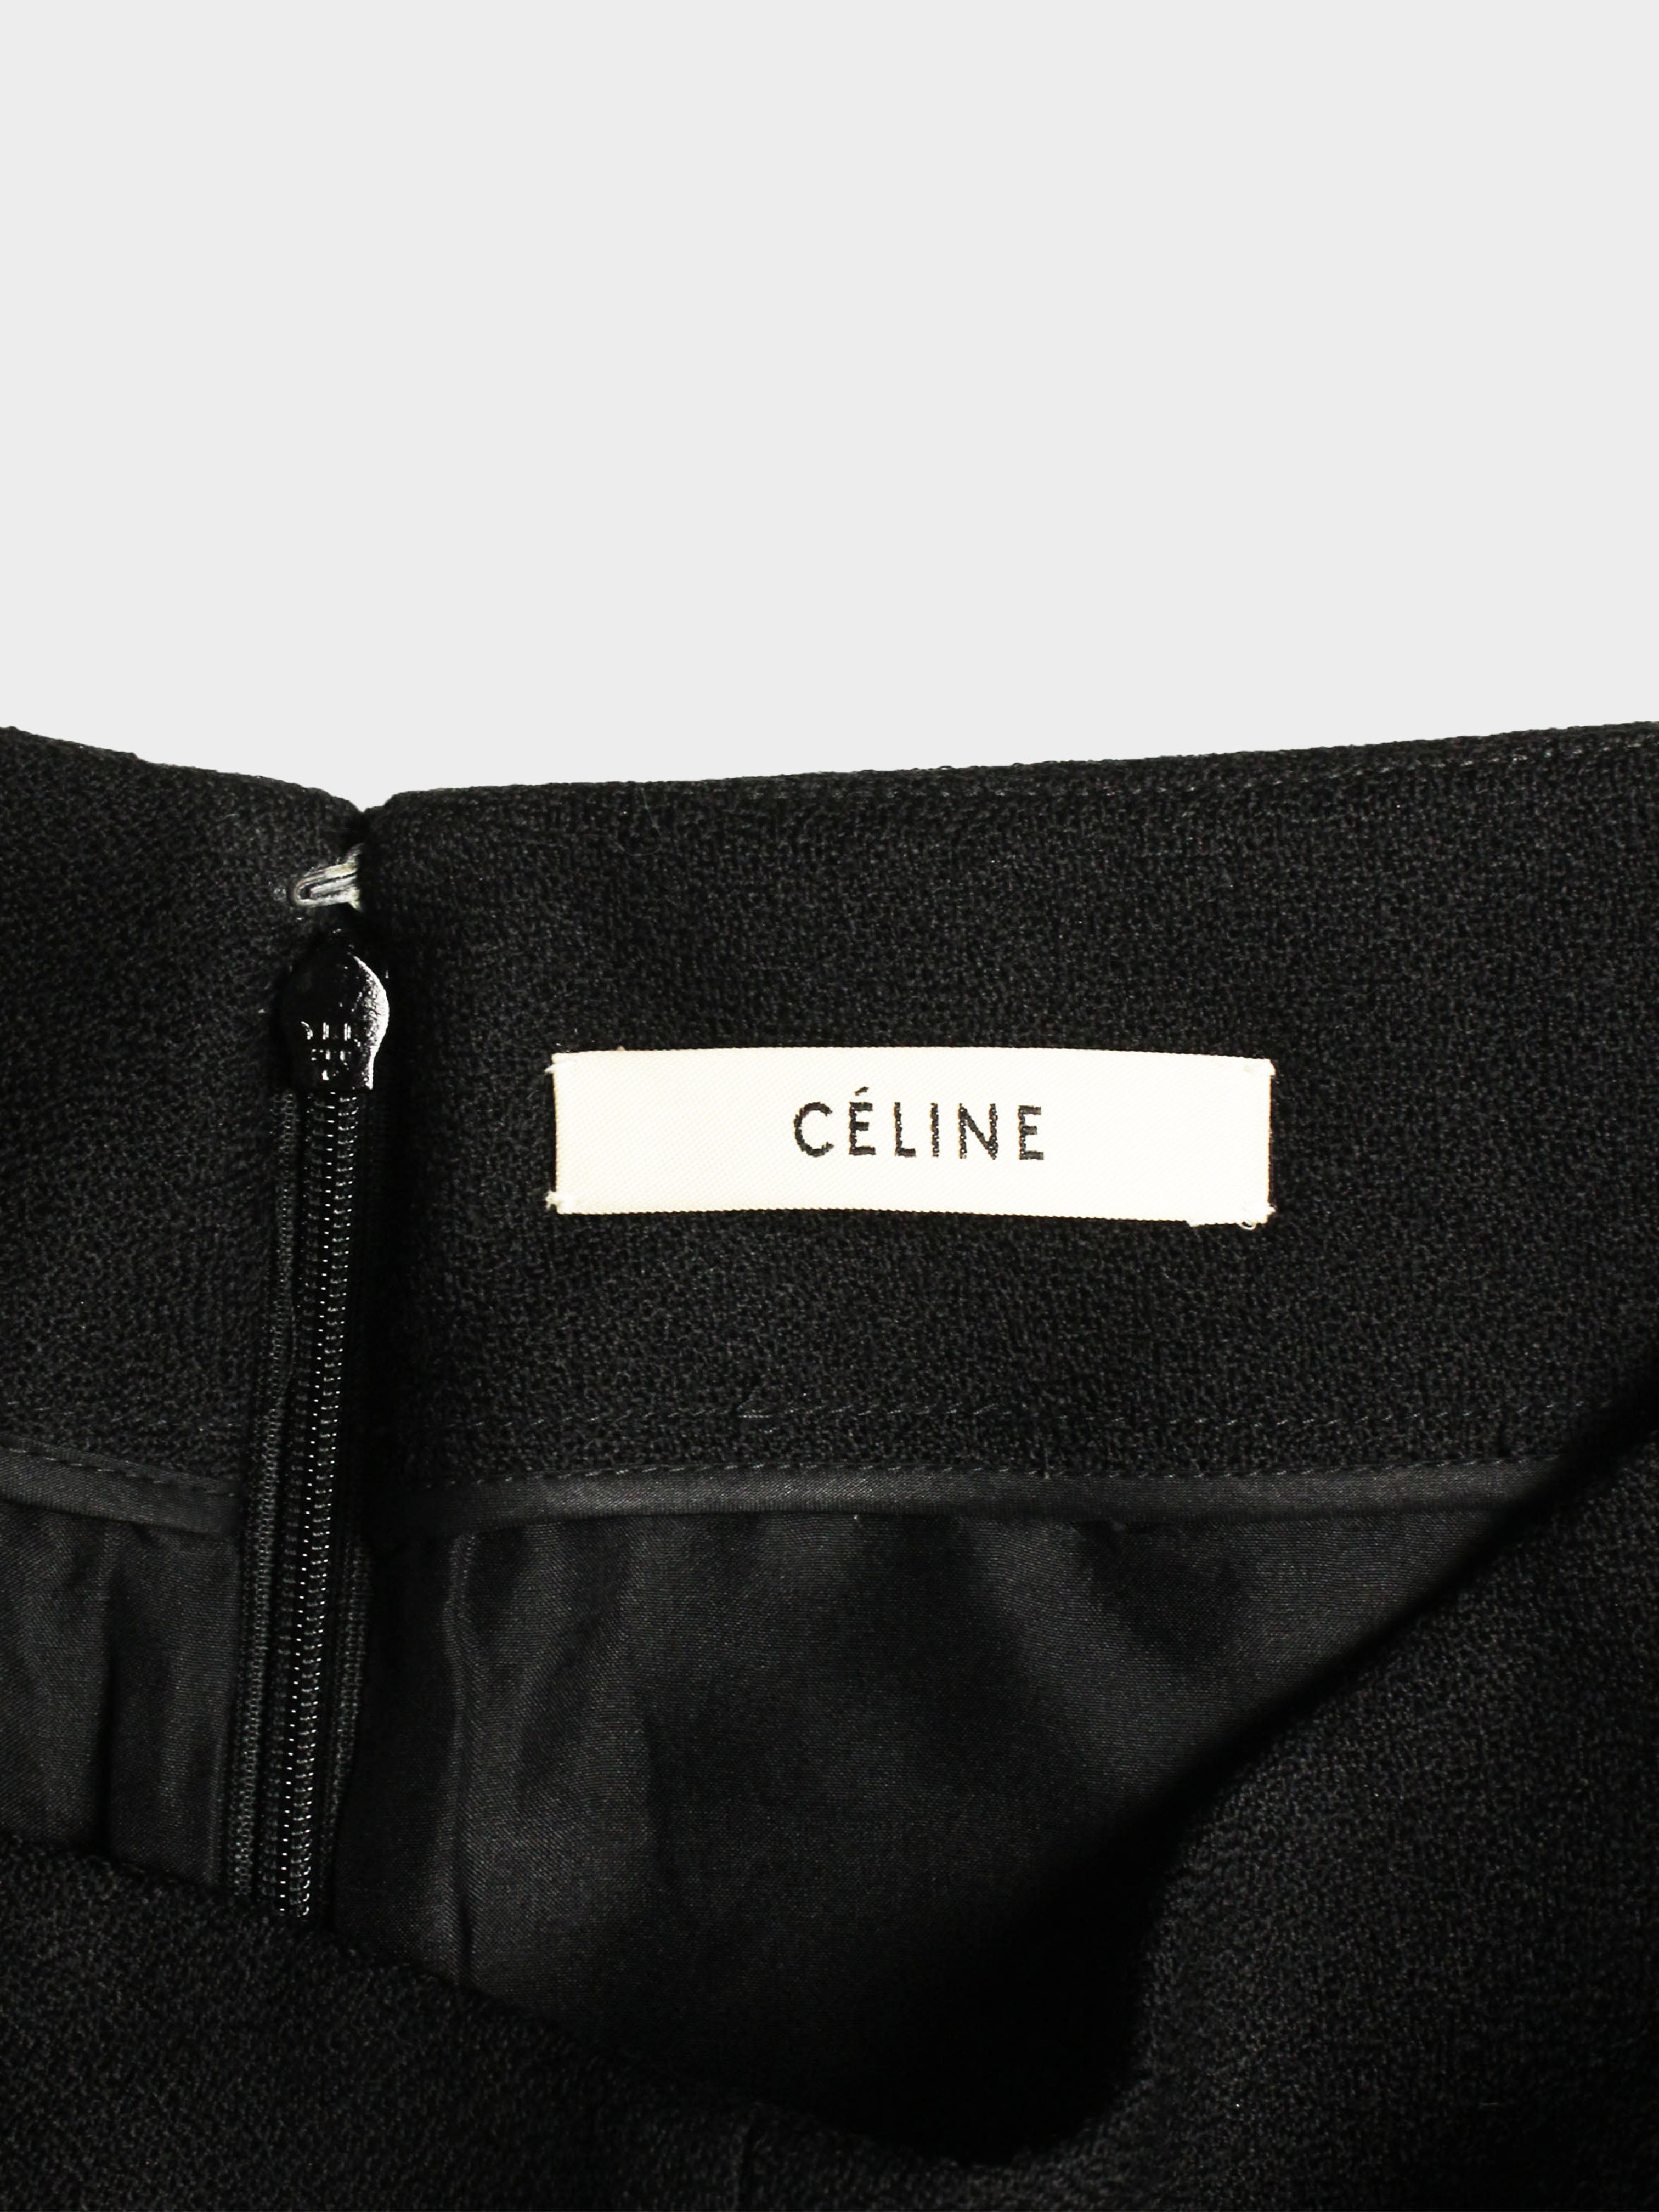 Céline by Phoebe Philo 2010s Black Wool Flared Skirt